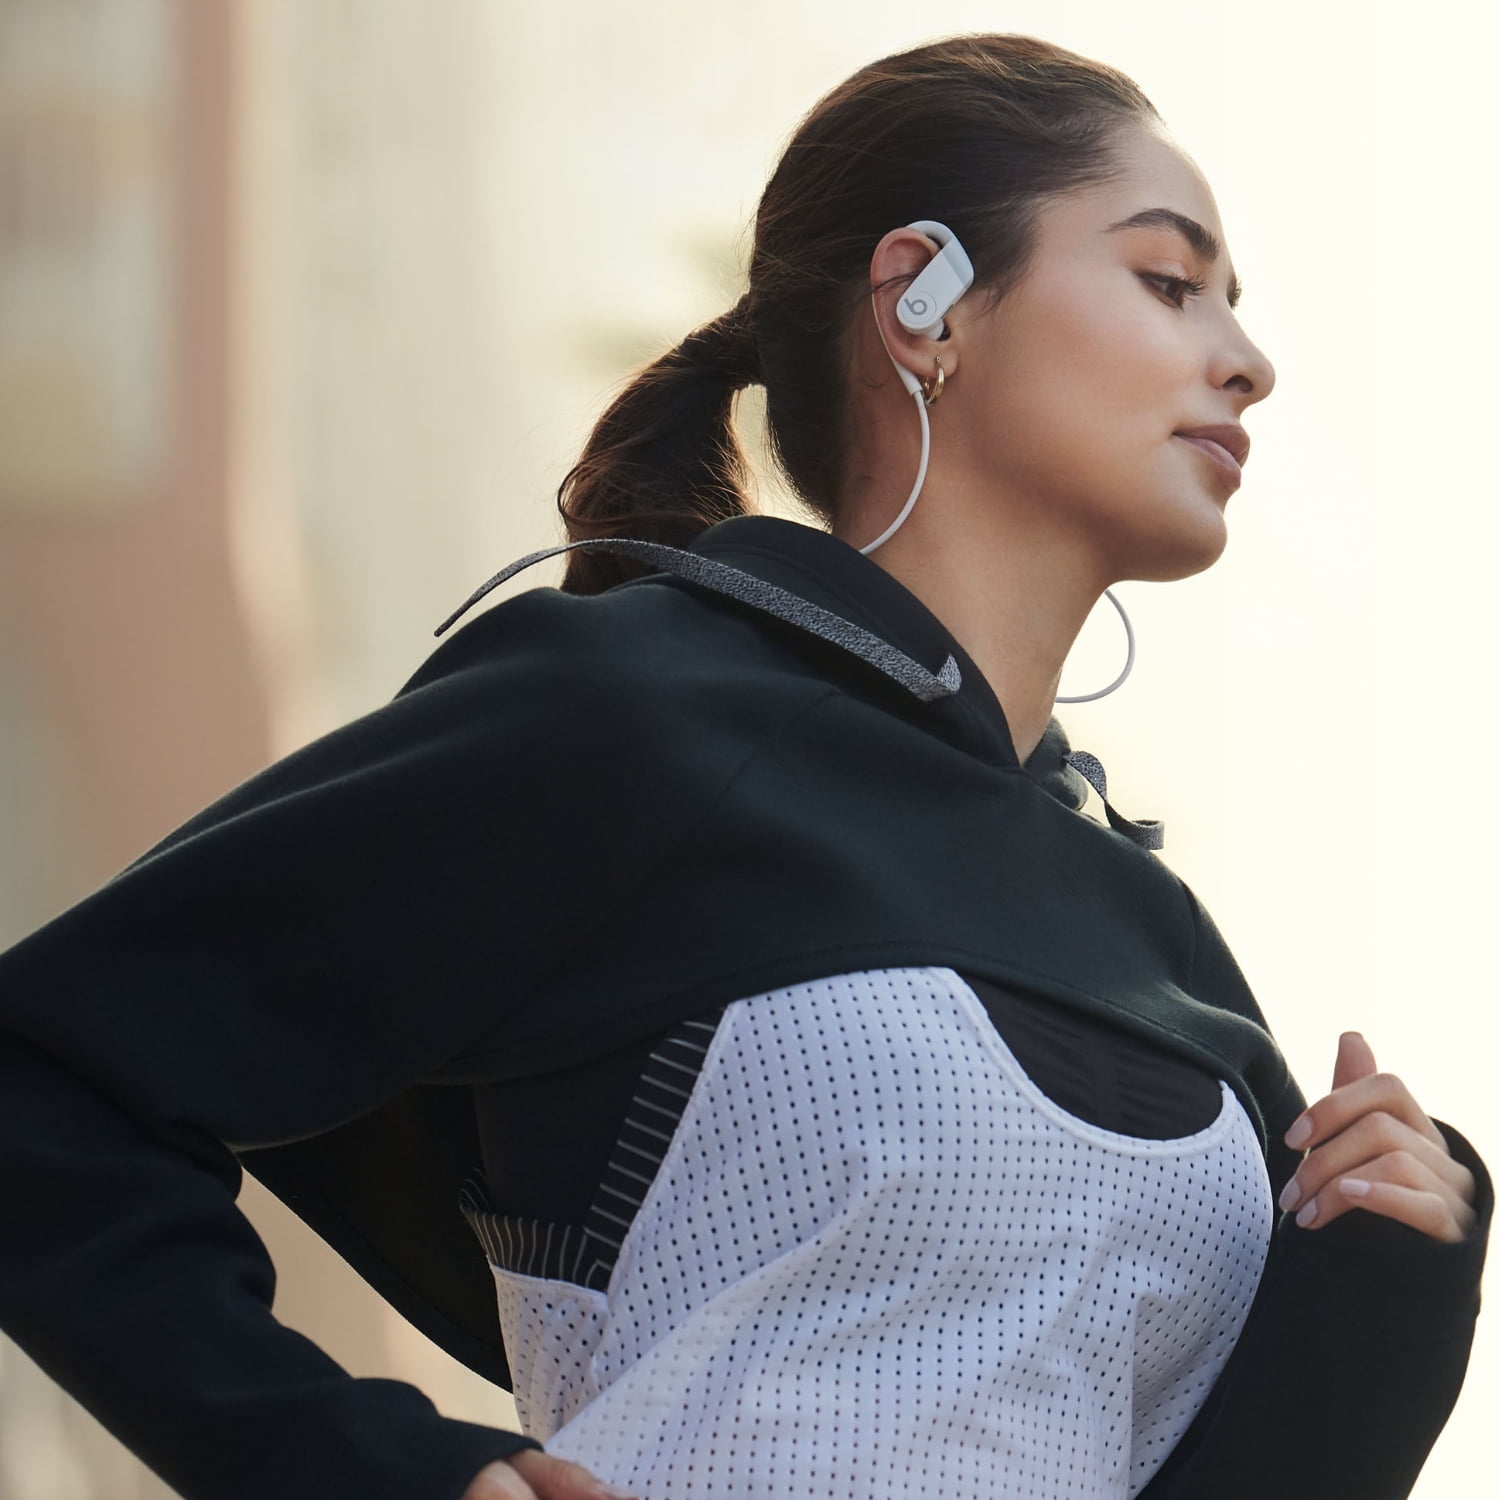 Sweat Resistant Earbuds Powerbeats High-Performance Wireless Earphones 15 Hours of Listening Time Class 1 Bluetooth Black Apple H1 Headphone Chip Latest Model 